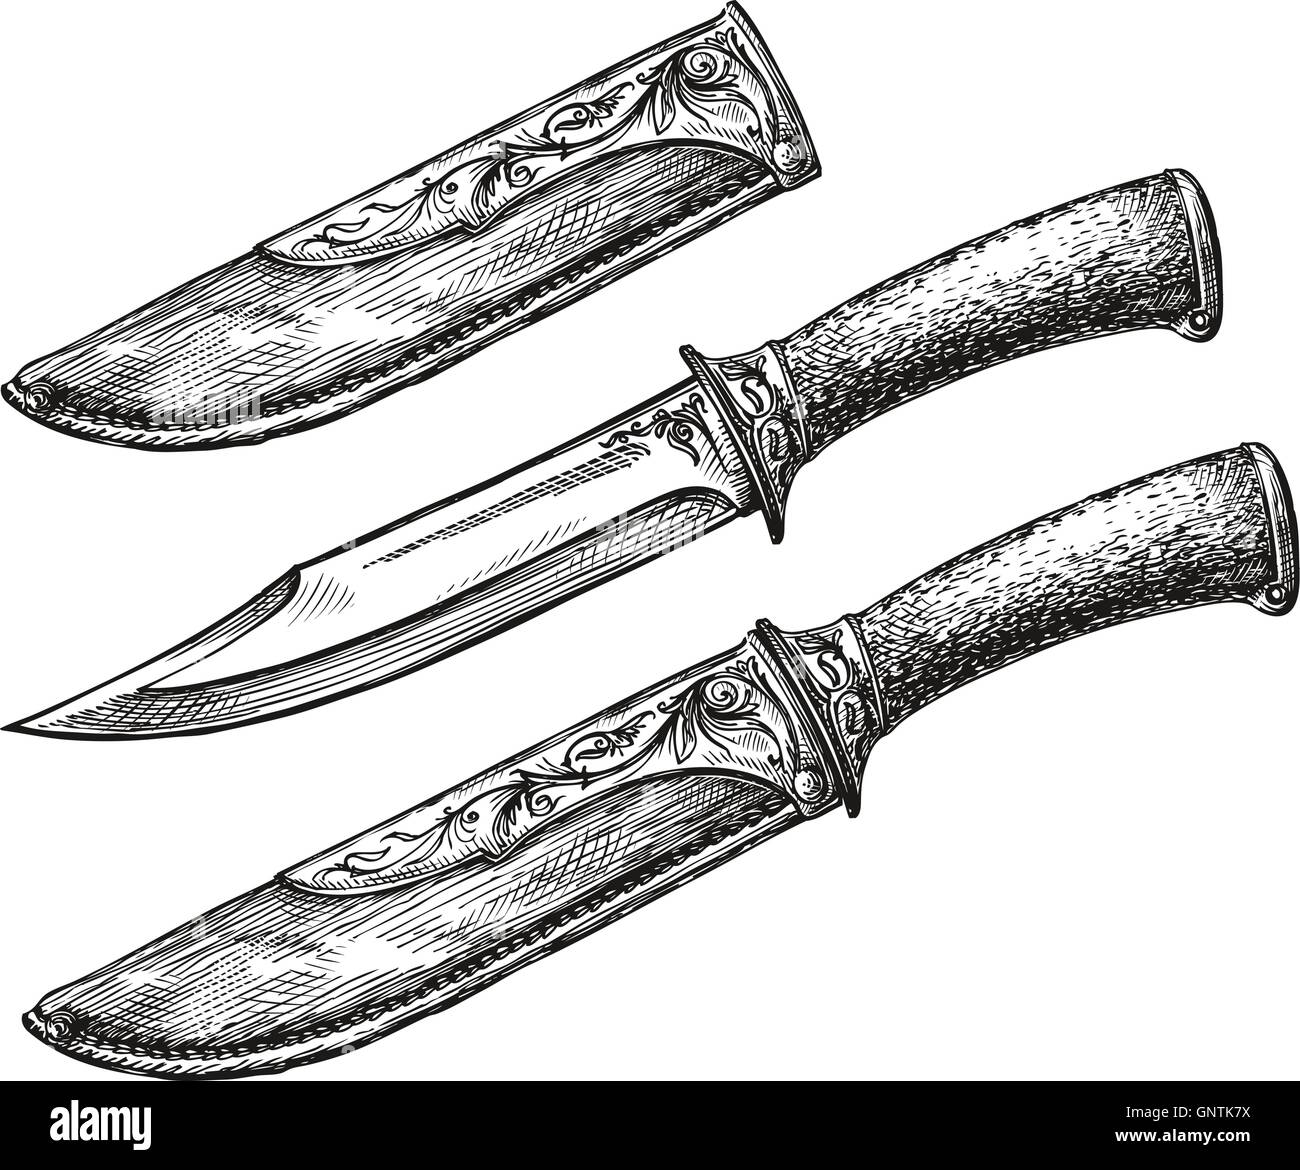 Handgezeichnete Vintage Messer. Skizze scharfe Waffe. Vektor-illustration Stock Vektor